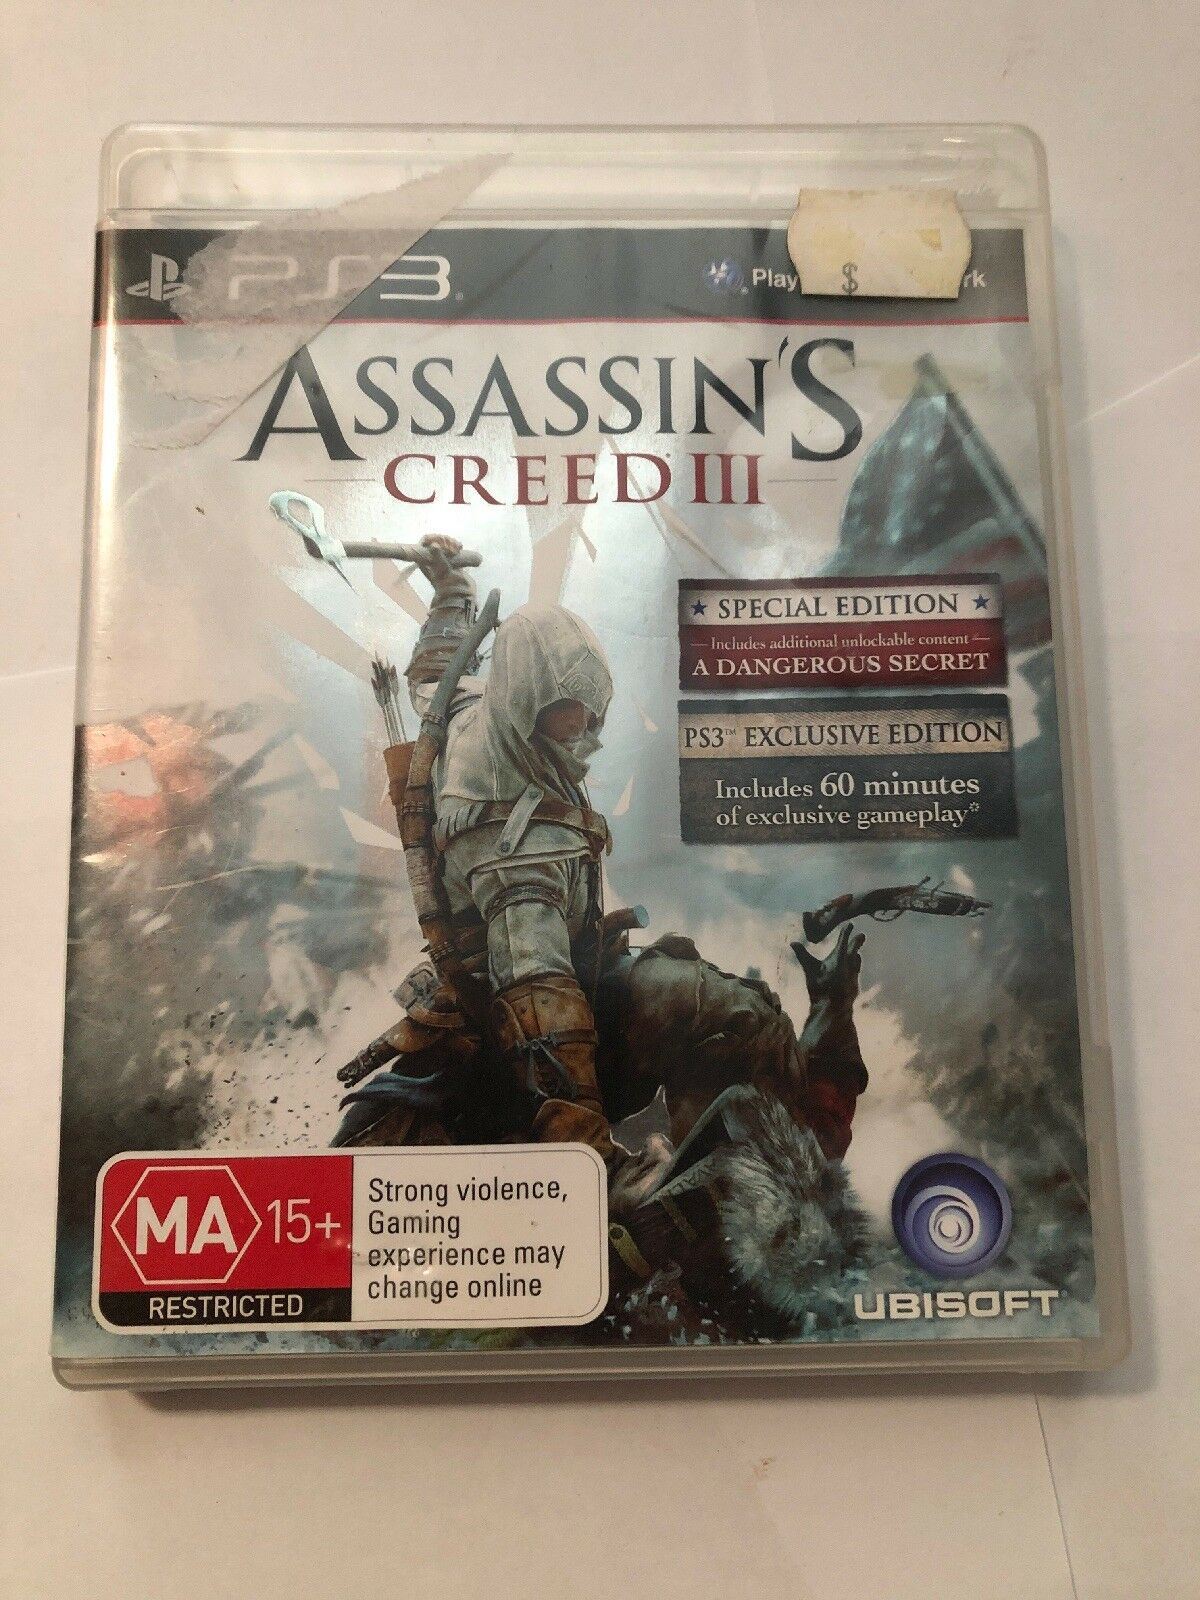 Jogo Nsw Assassins Creed Iii Remastered Ubisoft